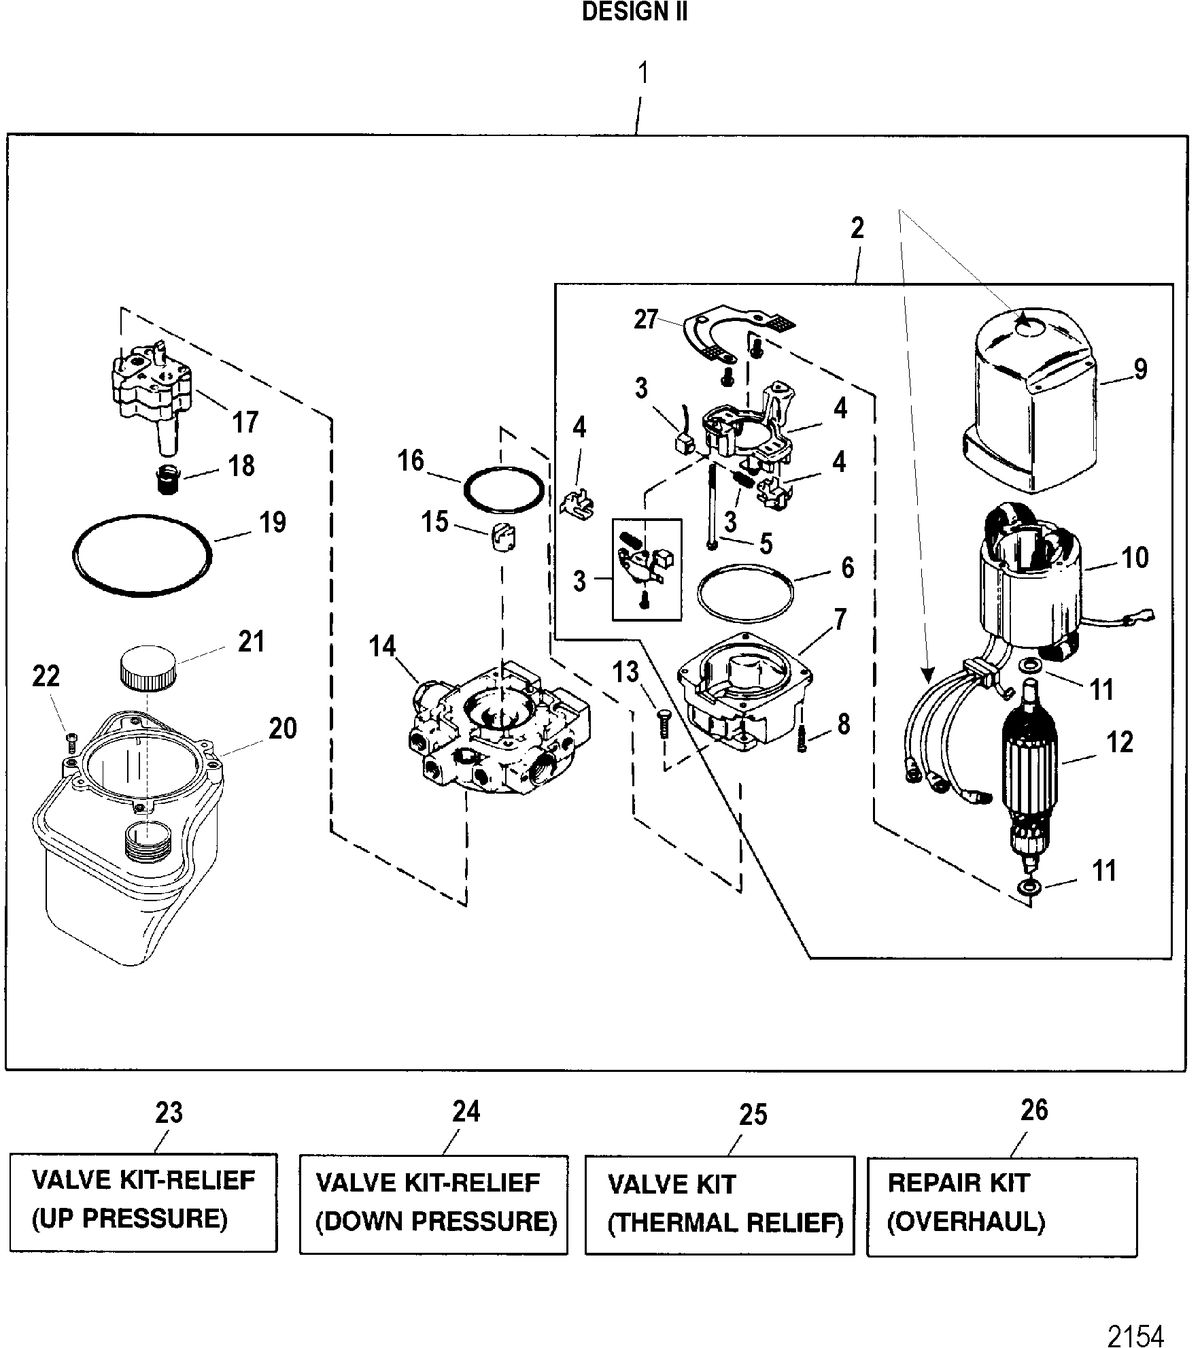 RACE STERNDRIVE 500 EFI Pump/Motor Assembly(Design II - 14336A25)